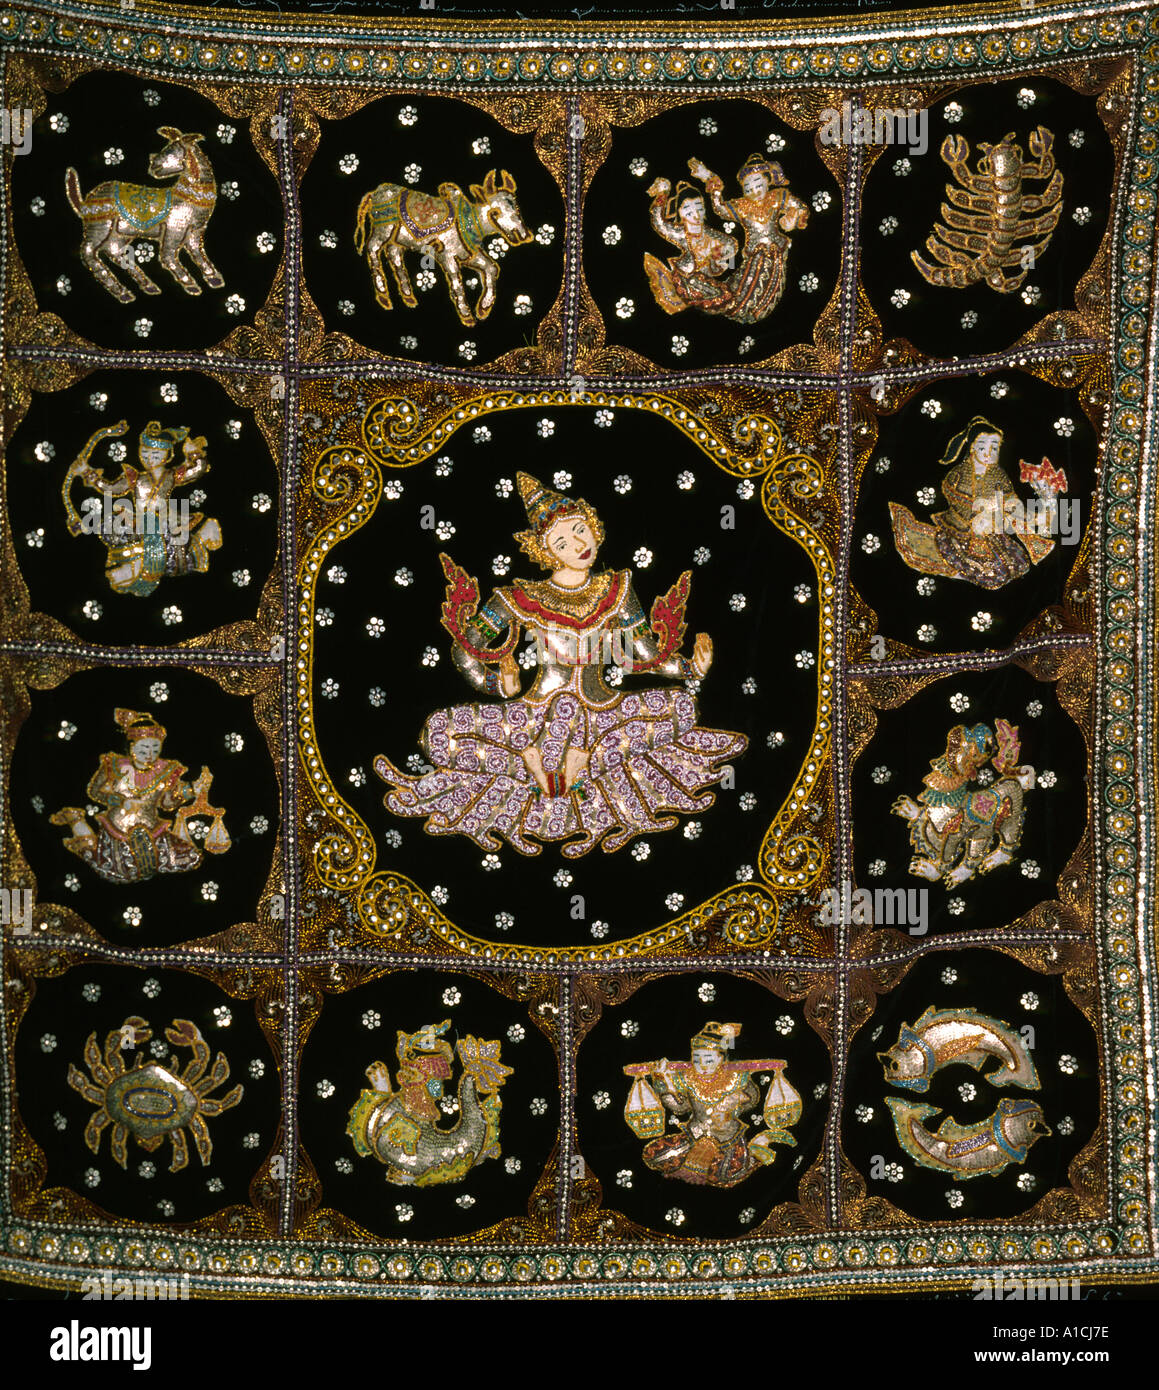 Myanmar Burma Mandalay crafts high quality astrological Mandalay tapestry in progress Stock Photo